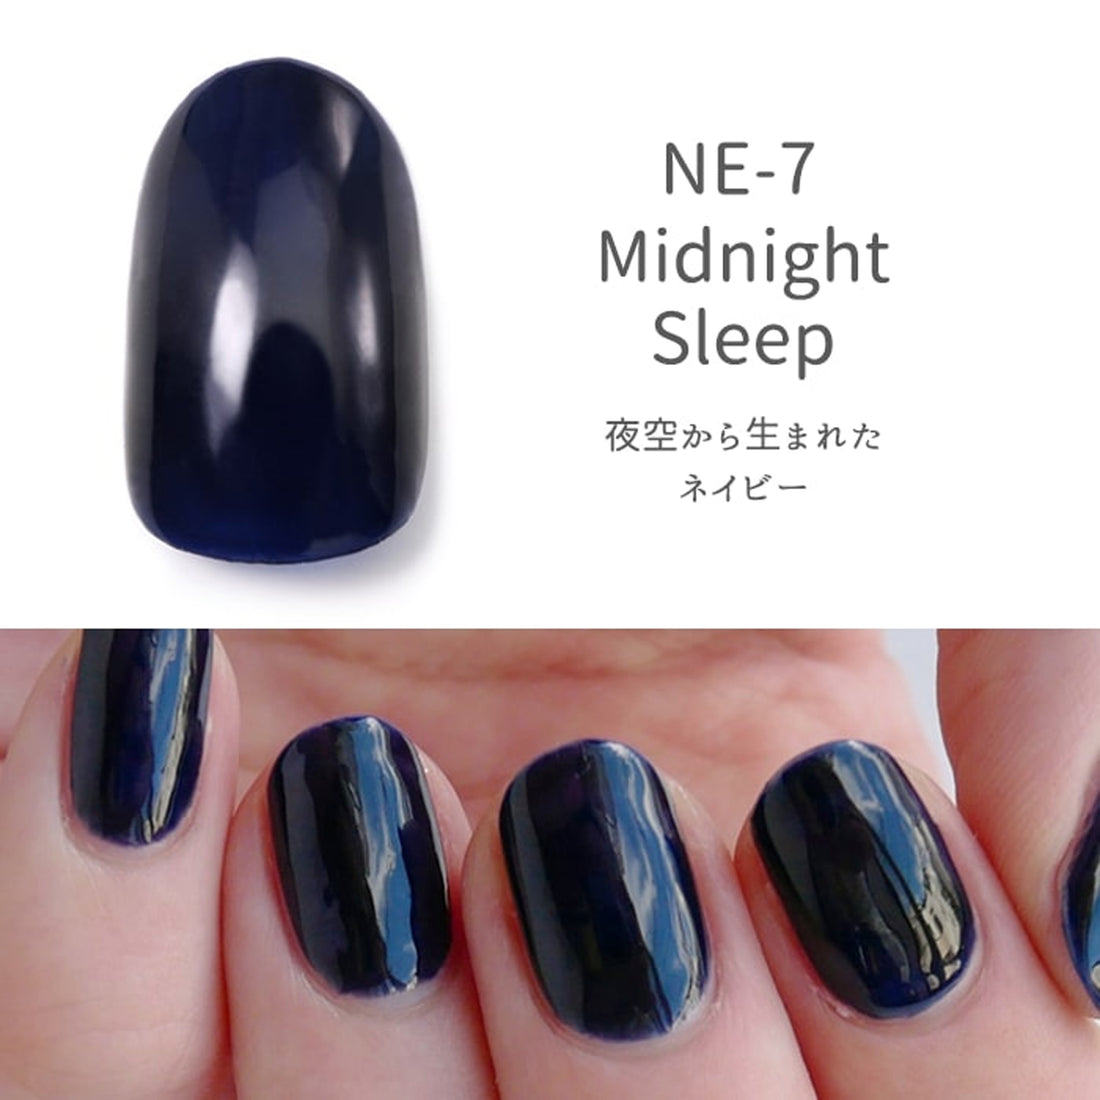 HOMEI Weekly Gel Midnight Sleep NE-7